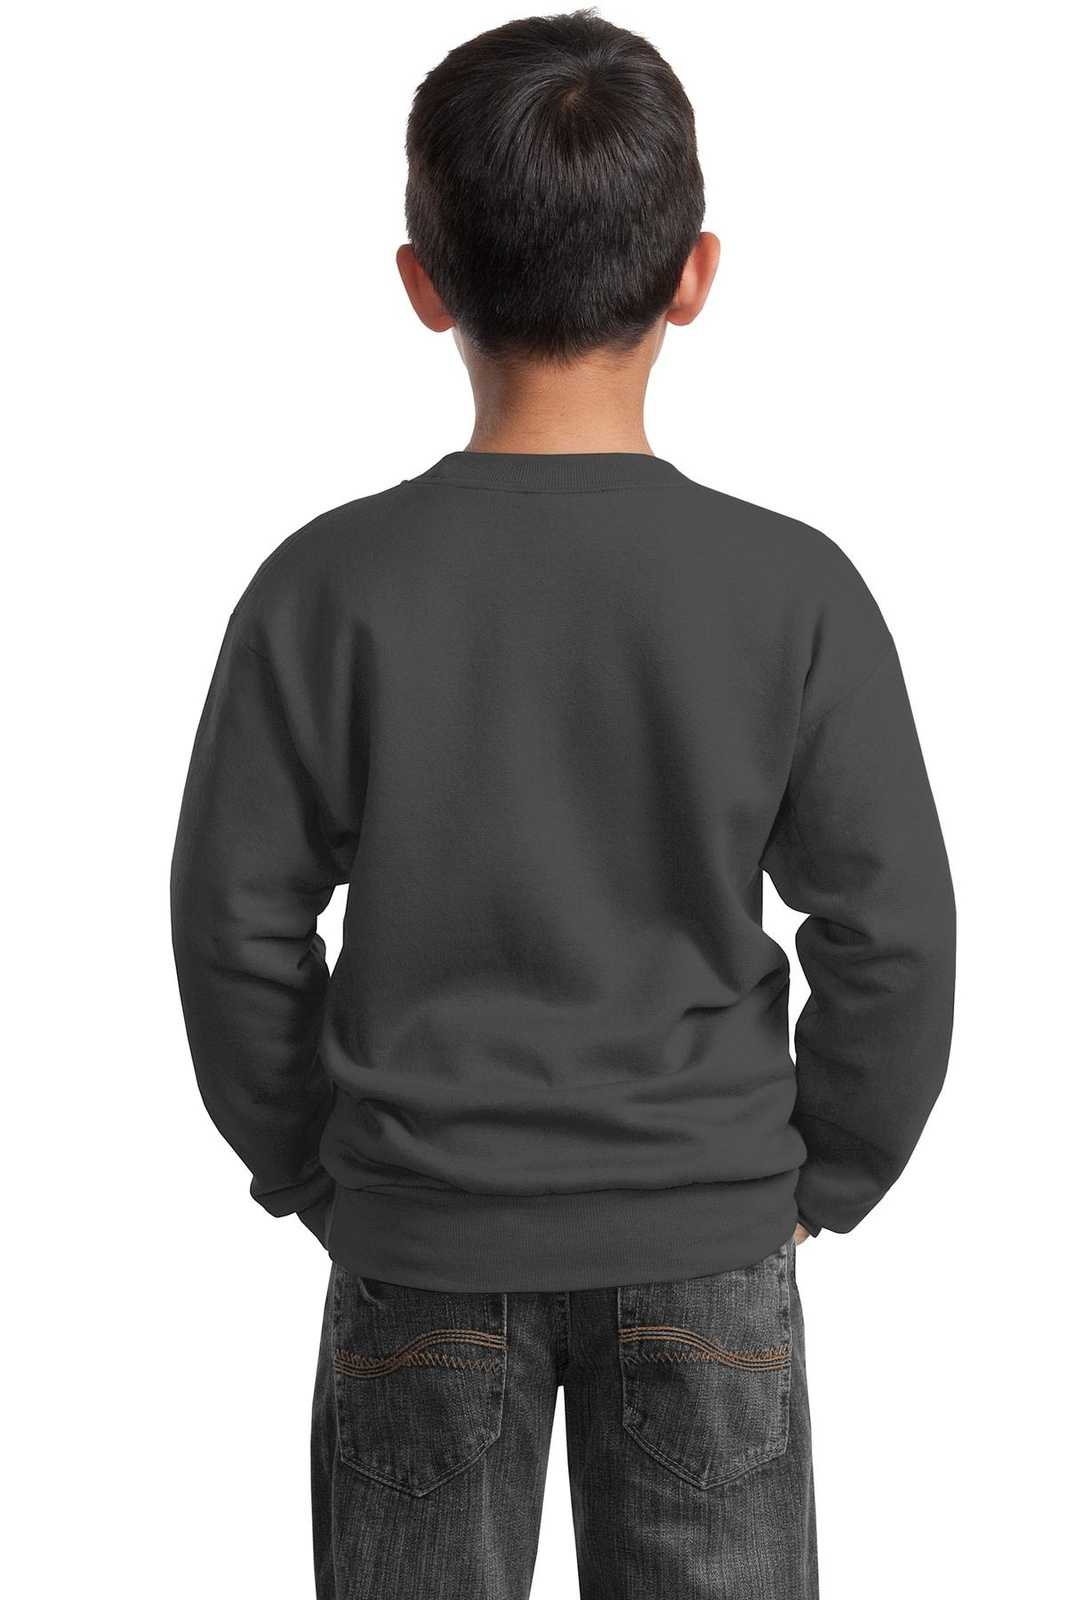 Port & Company PC90Y Youth Core Fleece Crewneck Sweatshirt - Charcoal - HIT a Double - 1